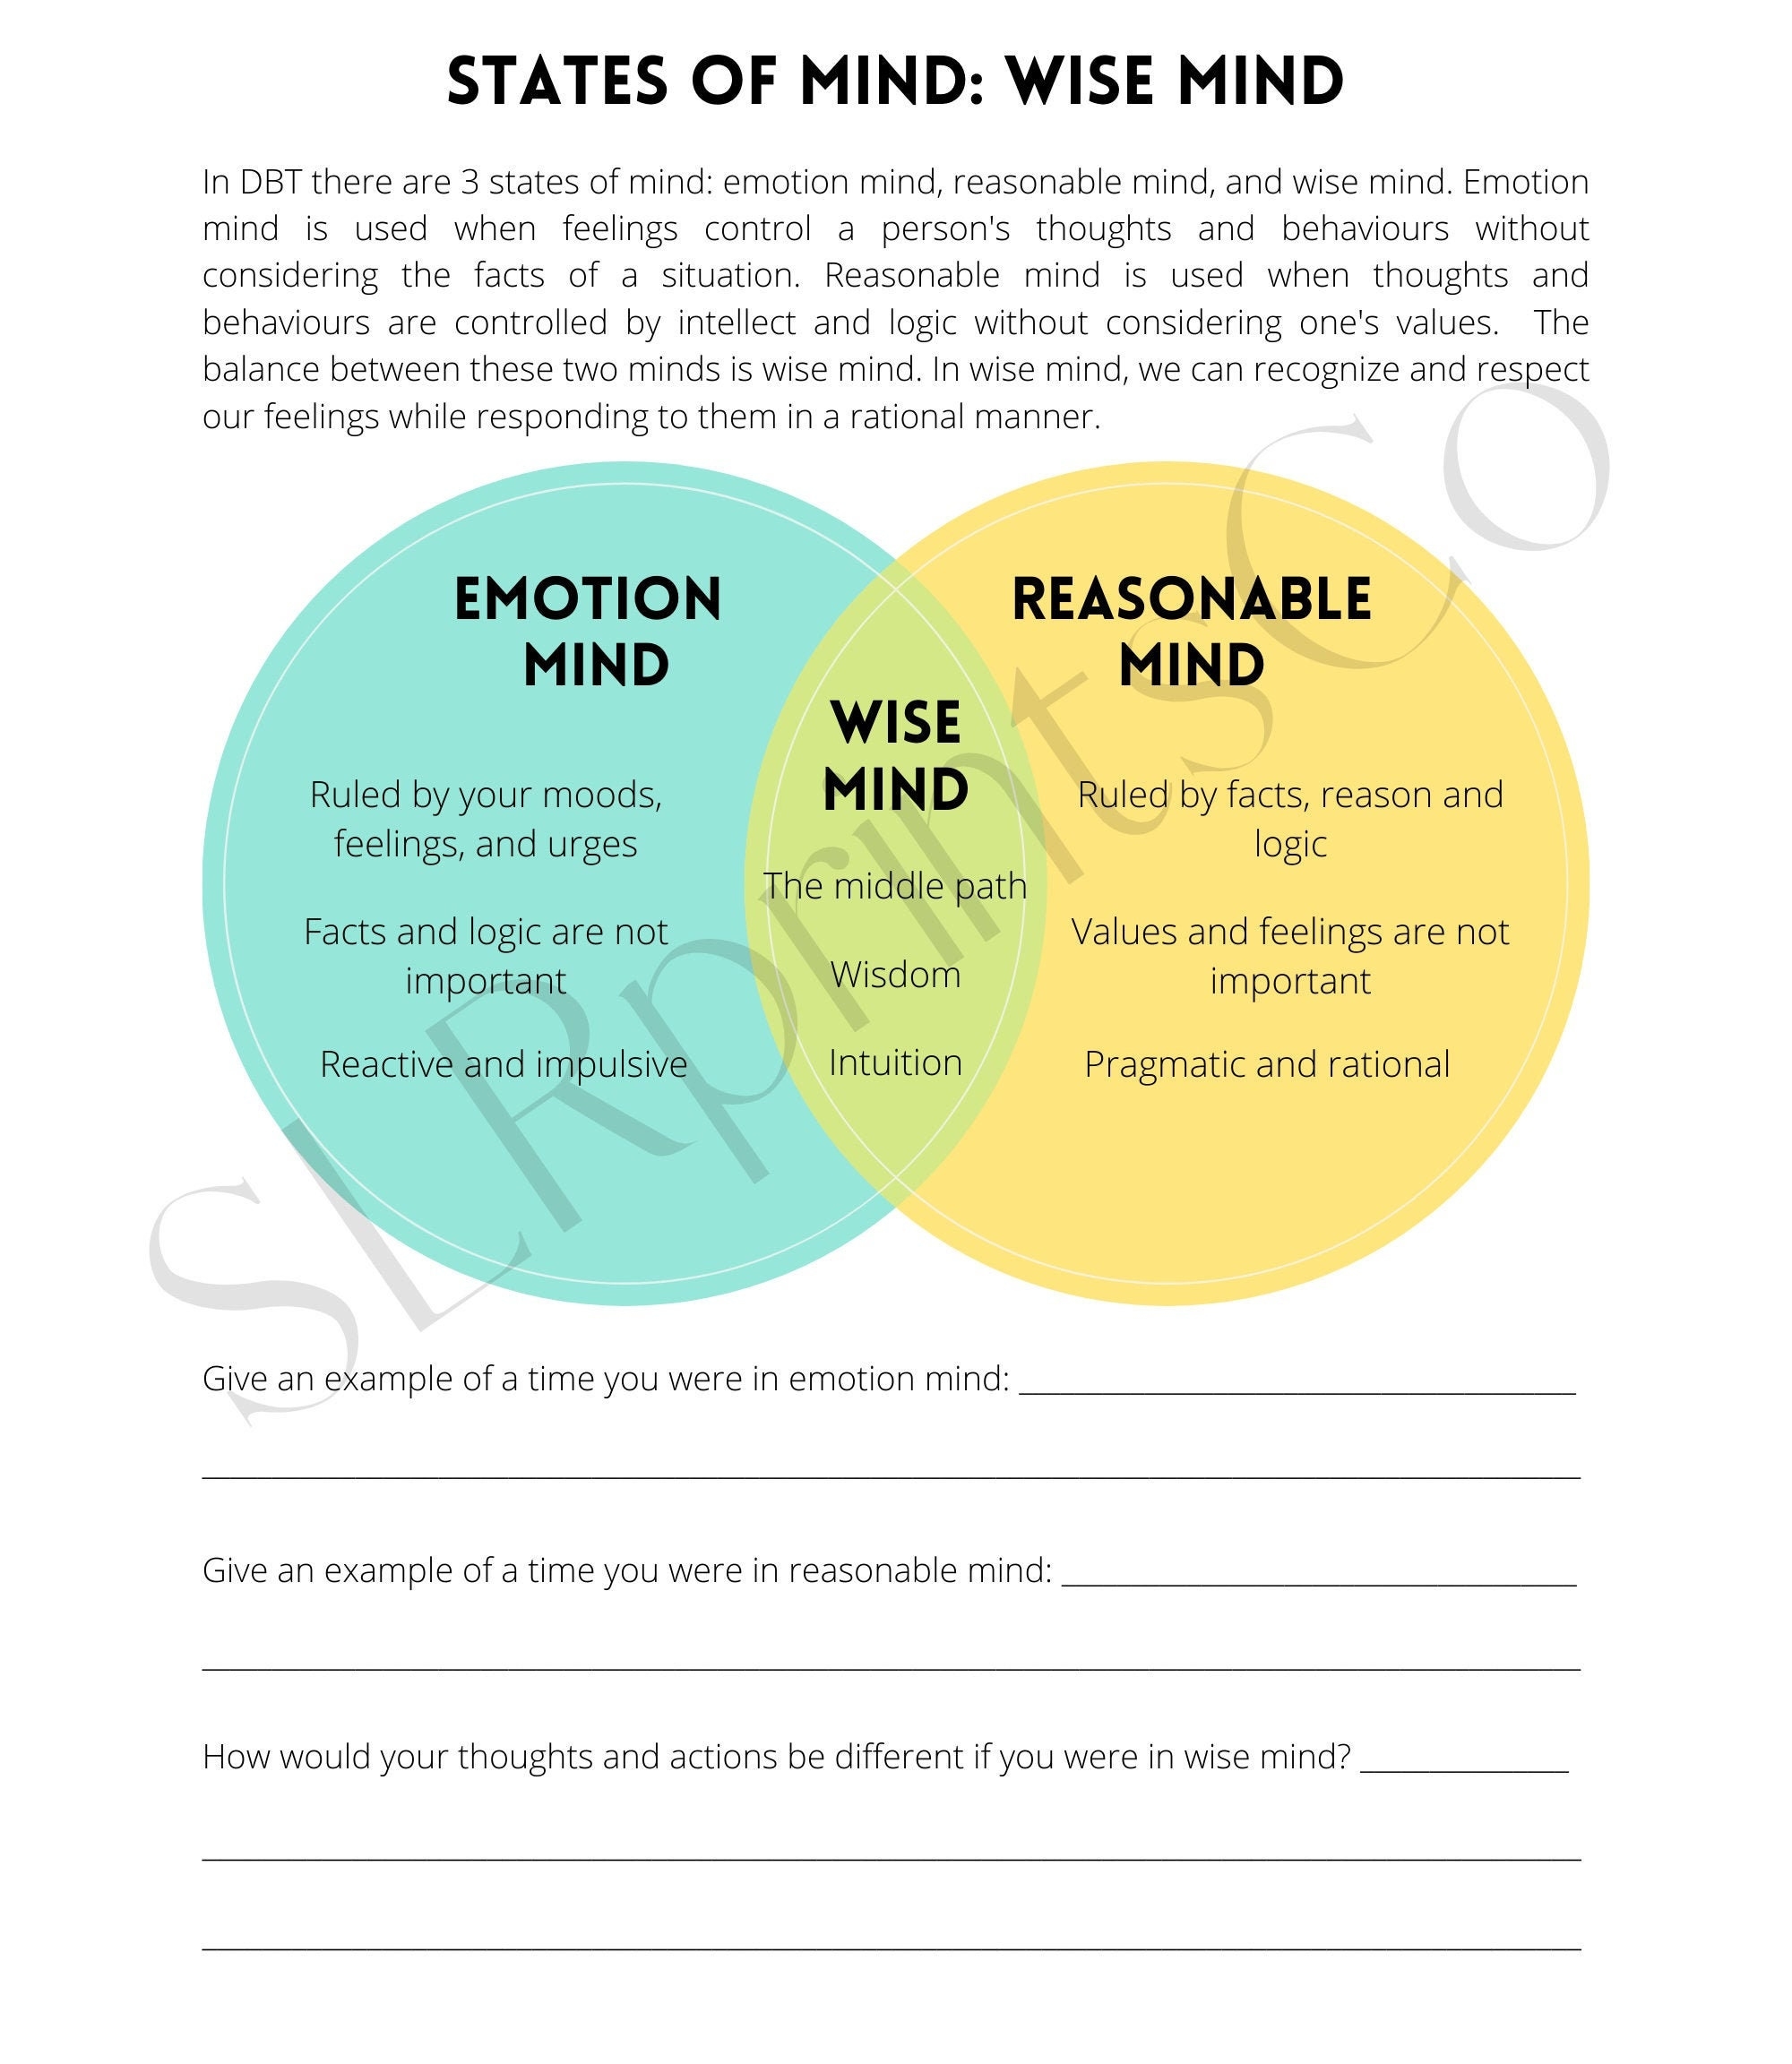 dbt-wise-mind-worksheet-pdf-dbt-worksheets